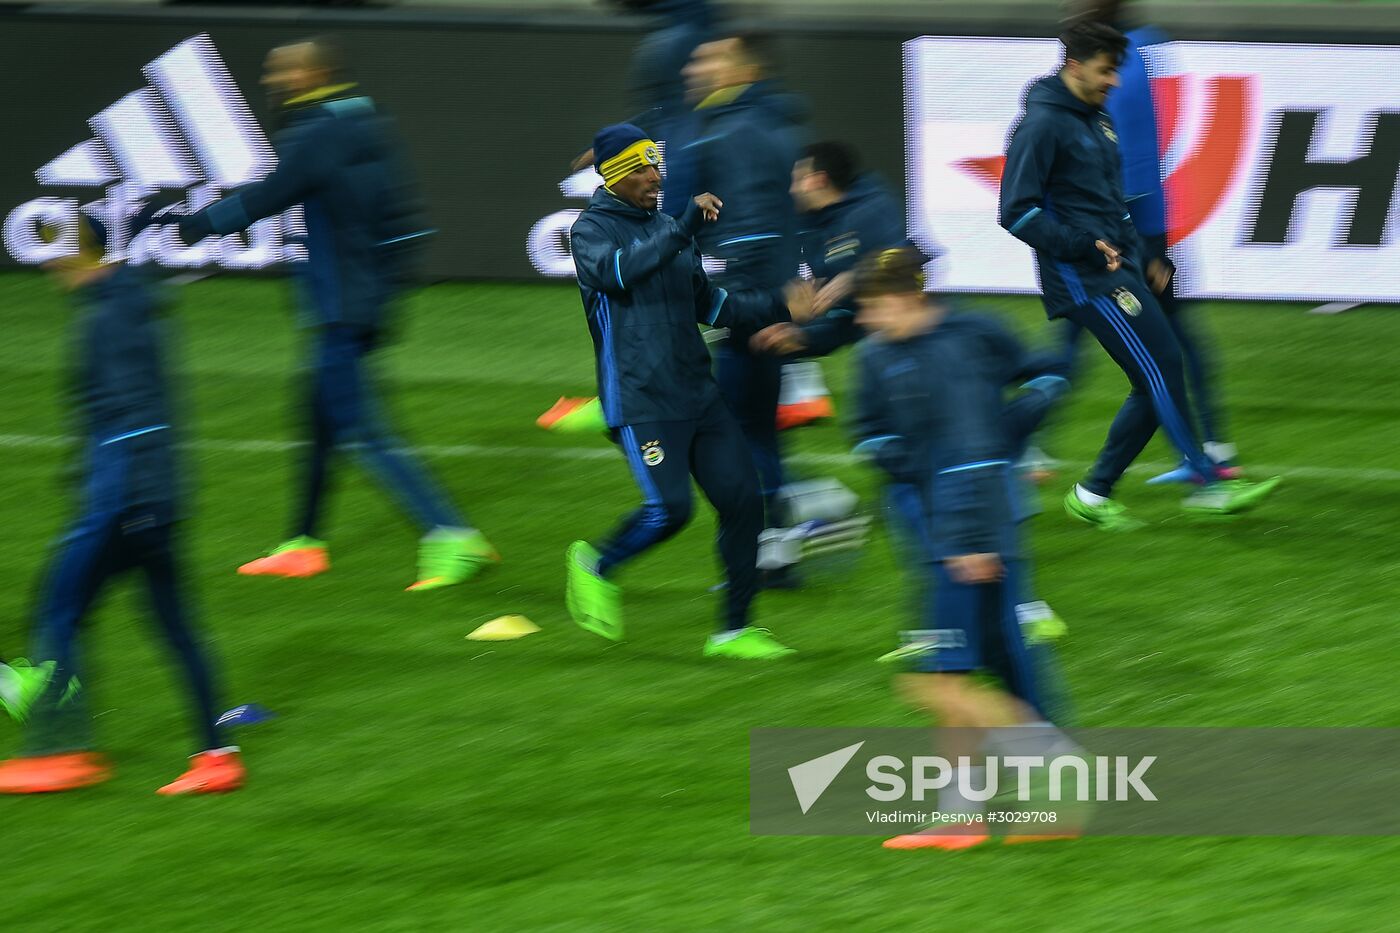 UEFA Europa League. FC Fenerbahce holds training session